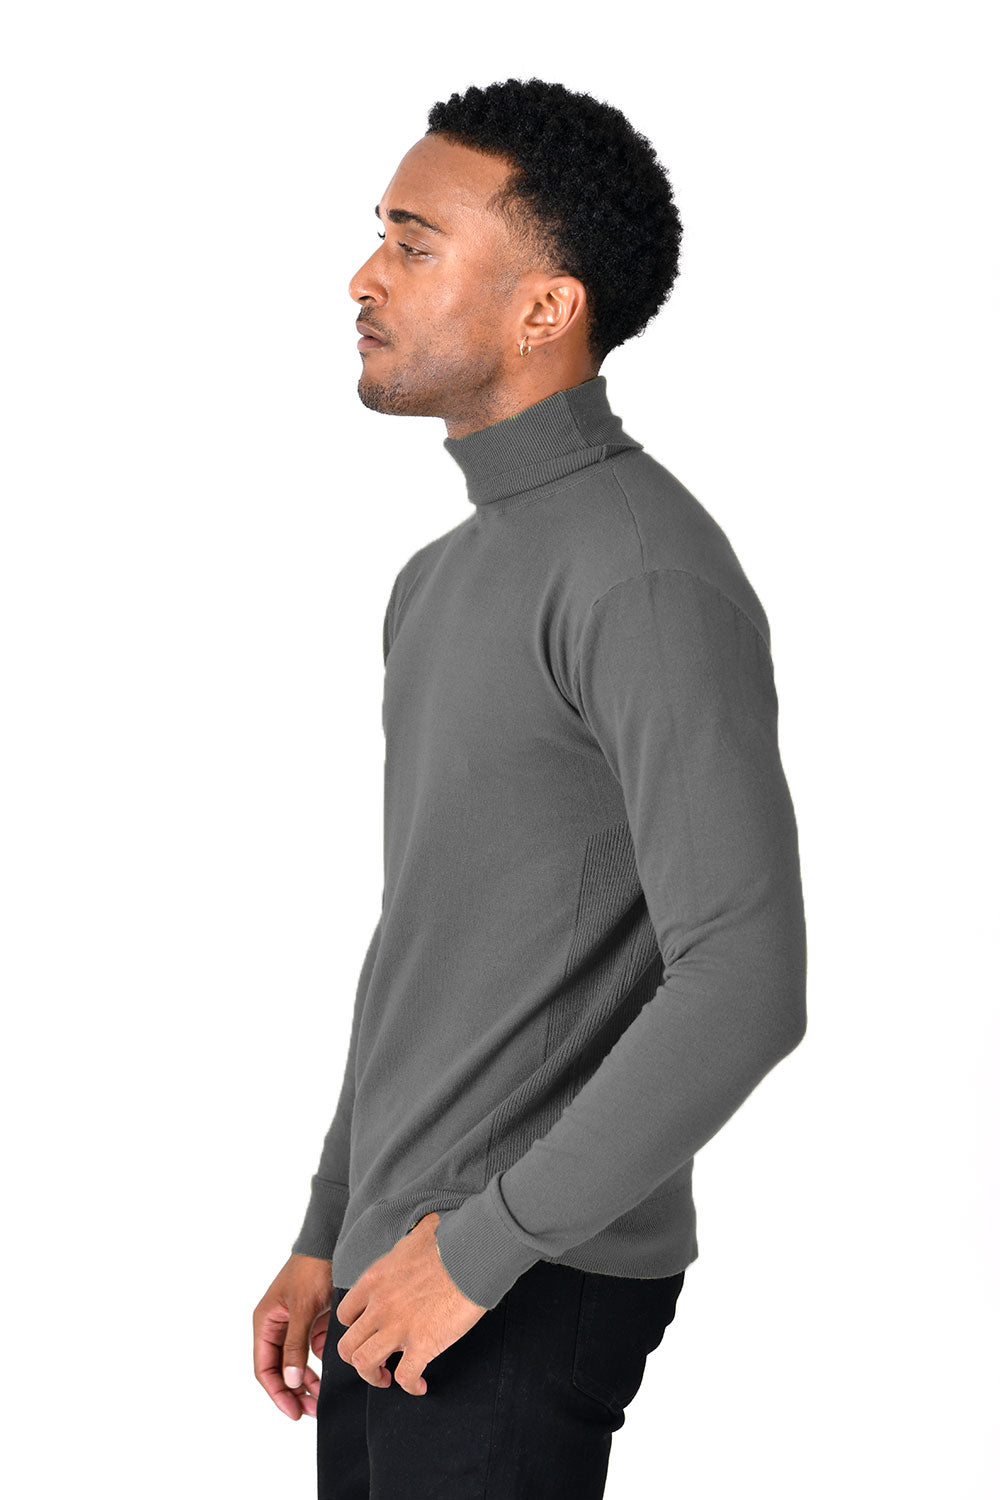 Men's Turtleneck Ribbed Solid Color Basic Sweater LS2100  Charcoal